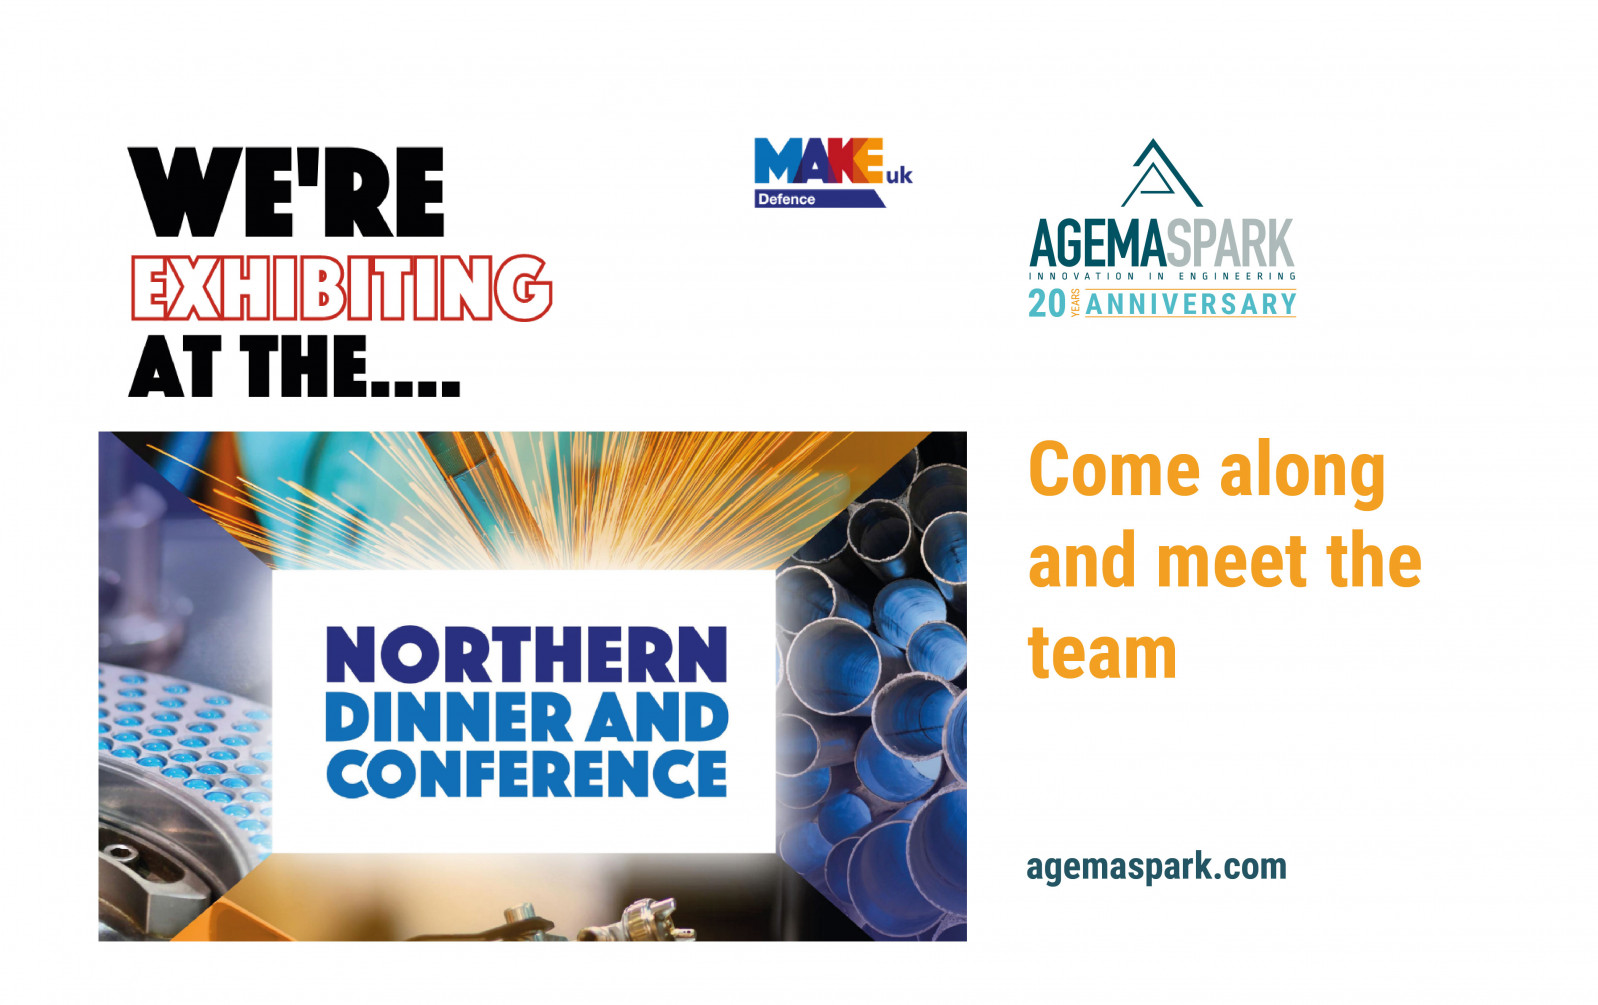 Agemaspark to exhibit at Make UK Northern Conference